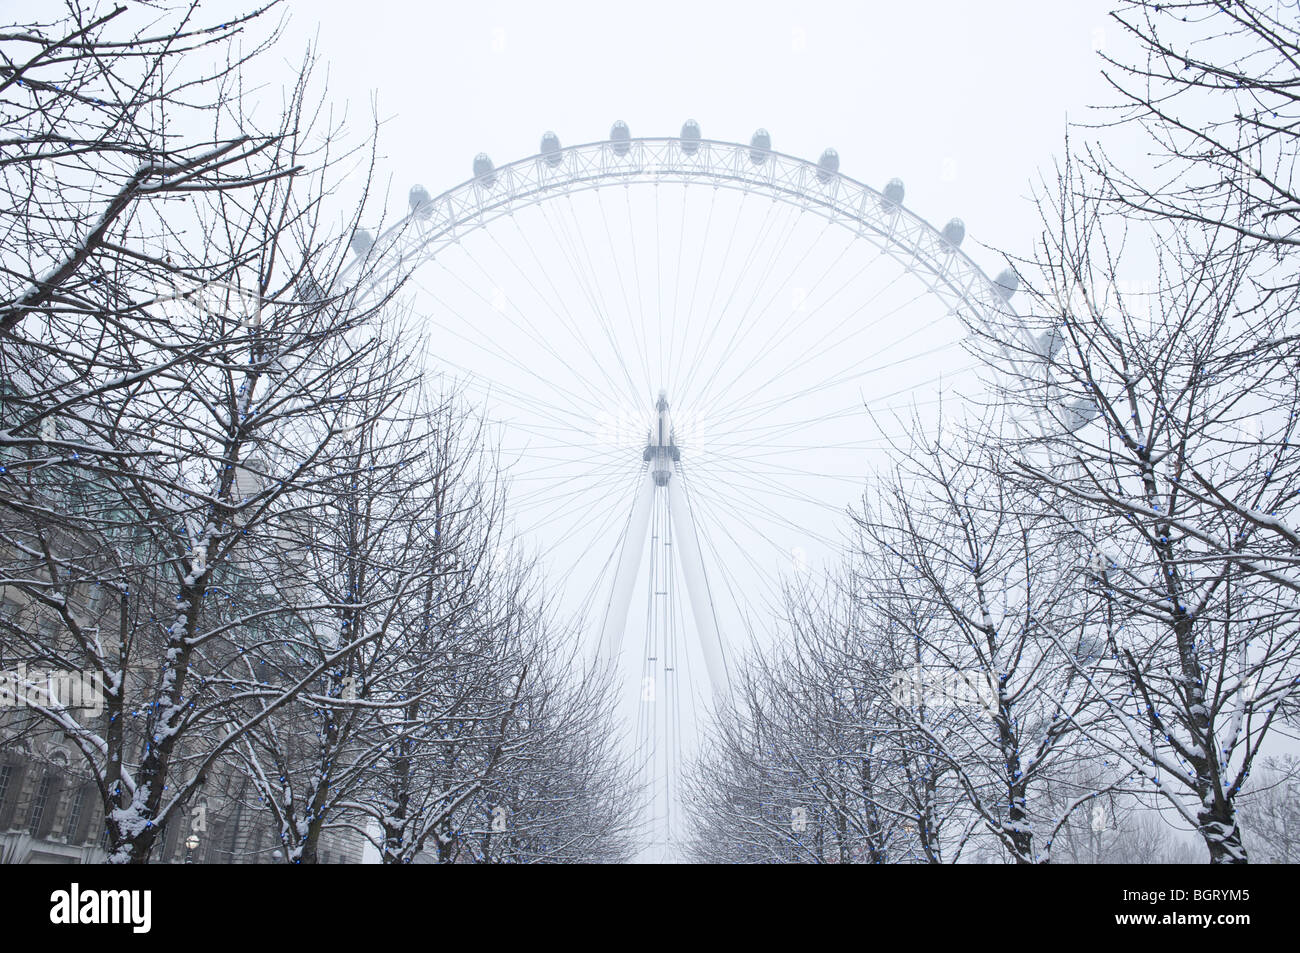 London eye ferris wheel in the winter snow Stock Photo